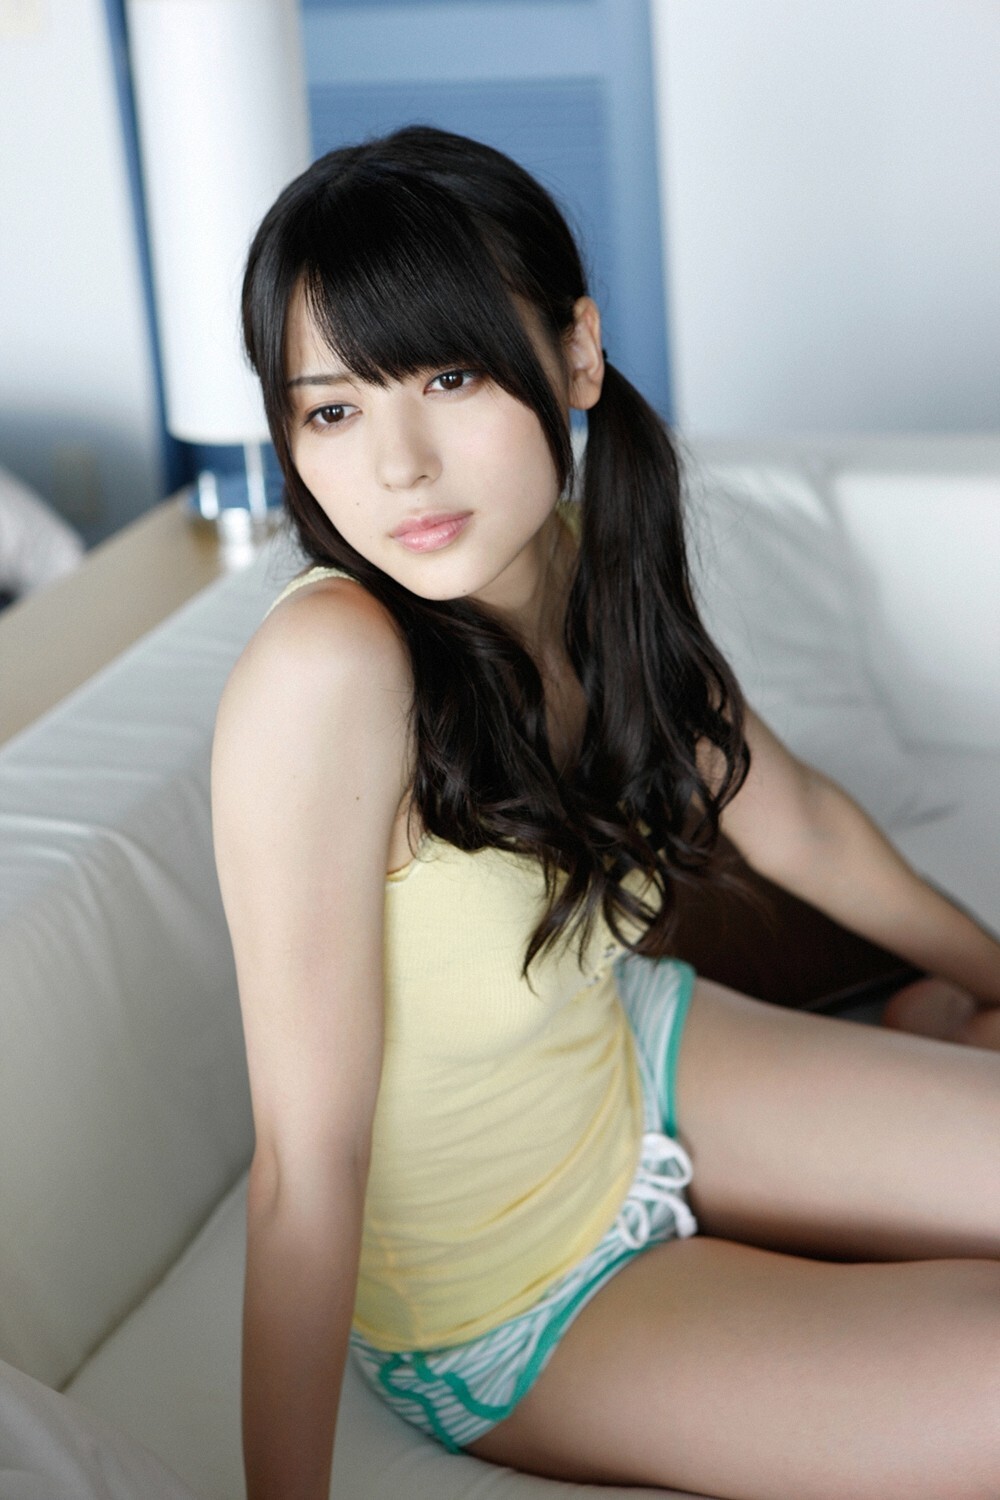 [ysweb] vol.519 yasushima dancing beauty, Eiri Suzuki, a beautiful Japanese girl